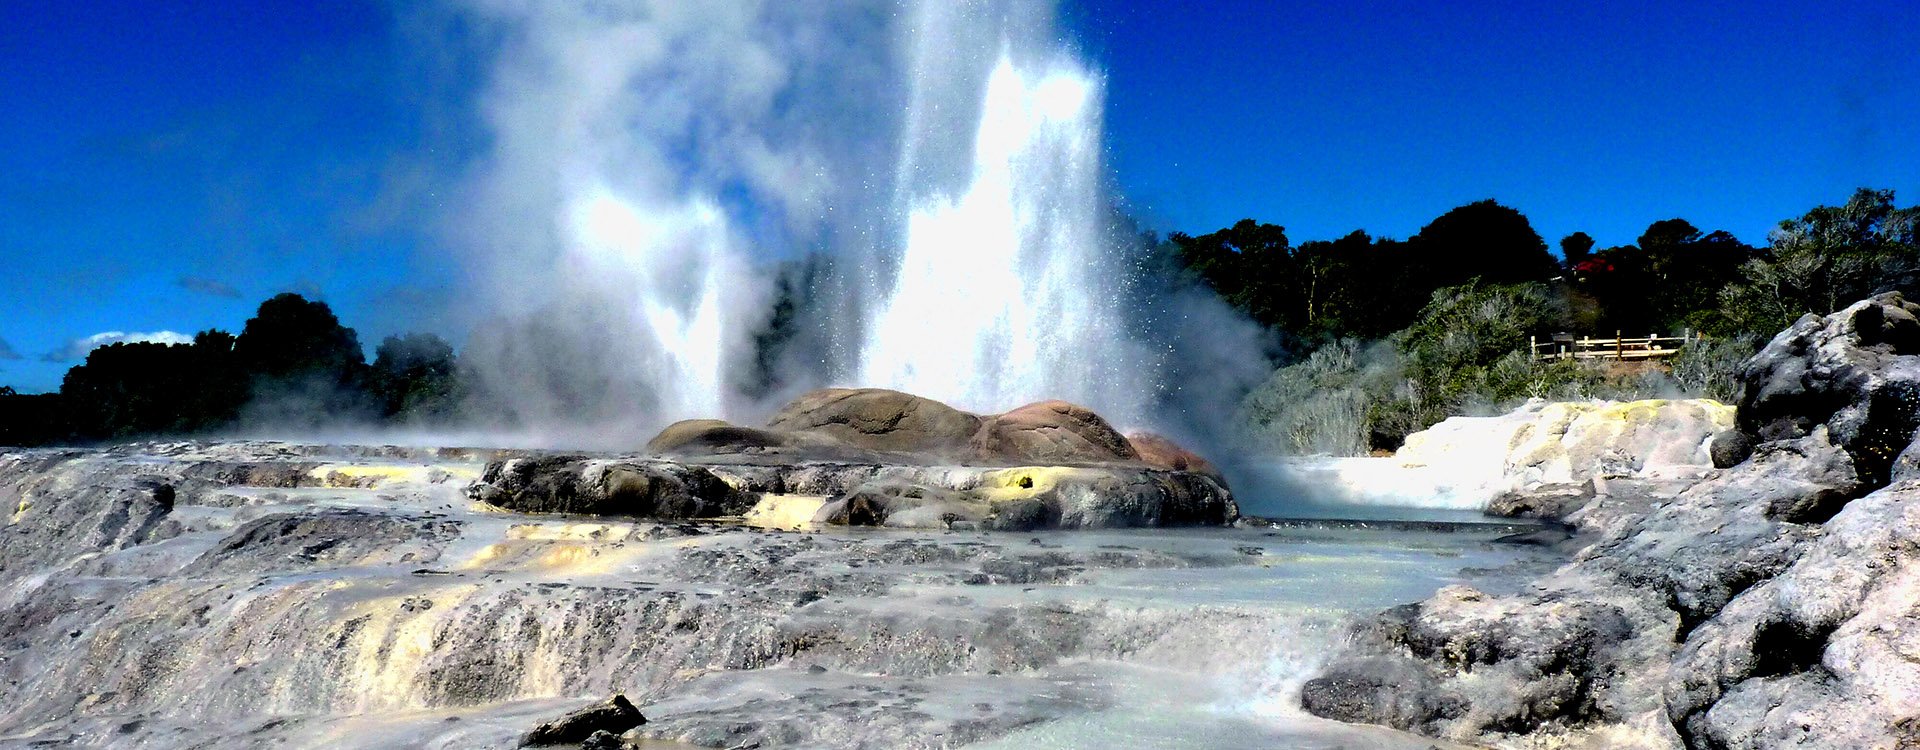 gush spring in geotermal area park in Te Puia Rotorua, New Zealand